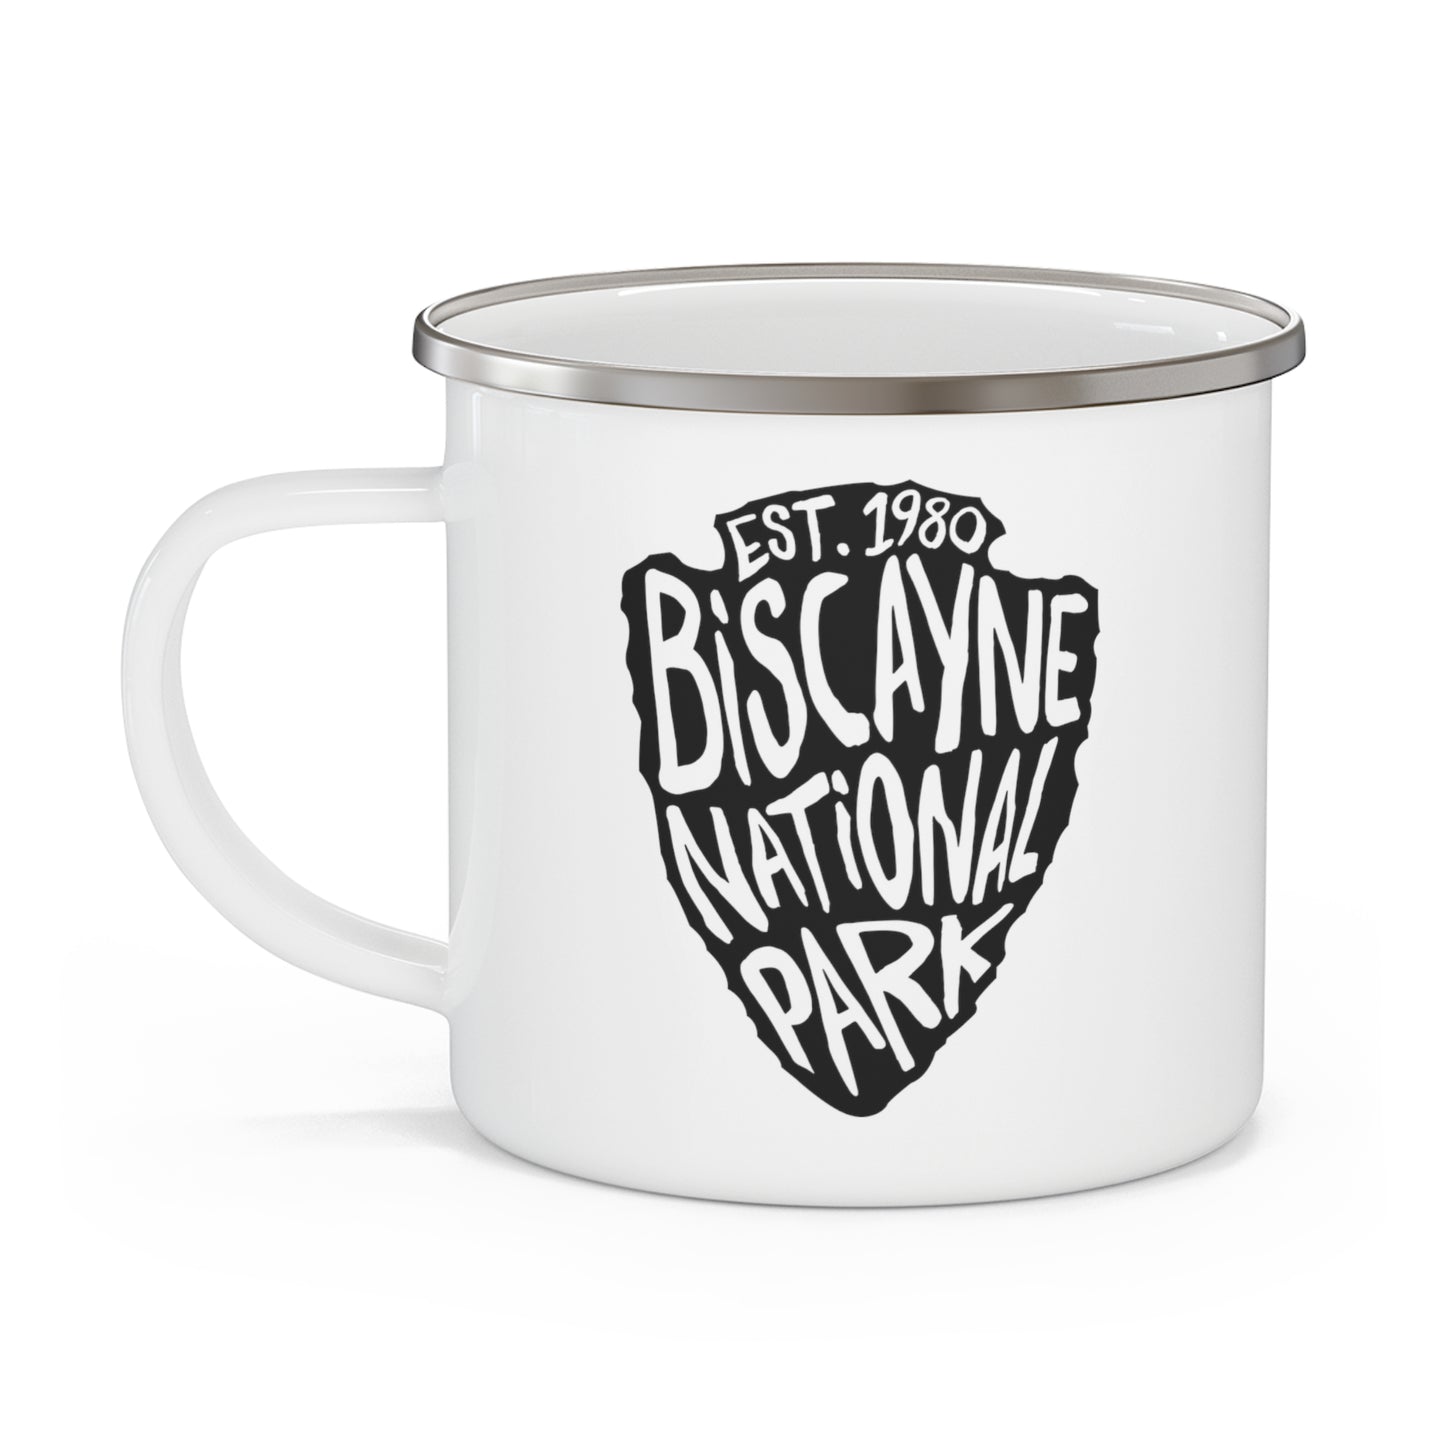 Biscayne National Park Enamel Camping Mug - Arrowhead